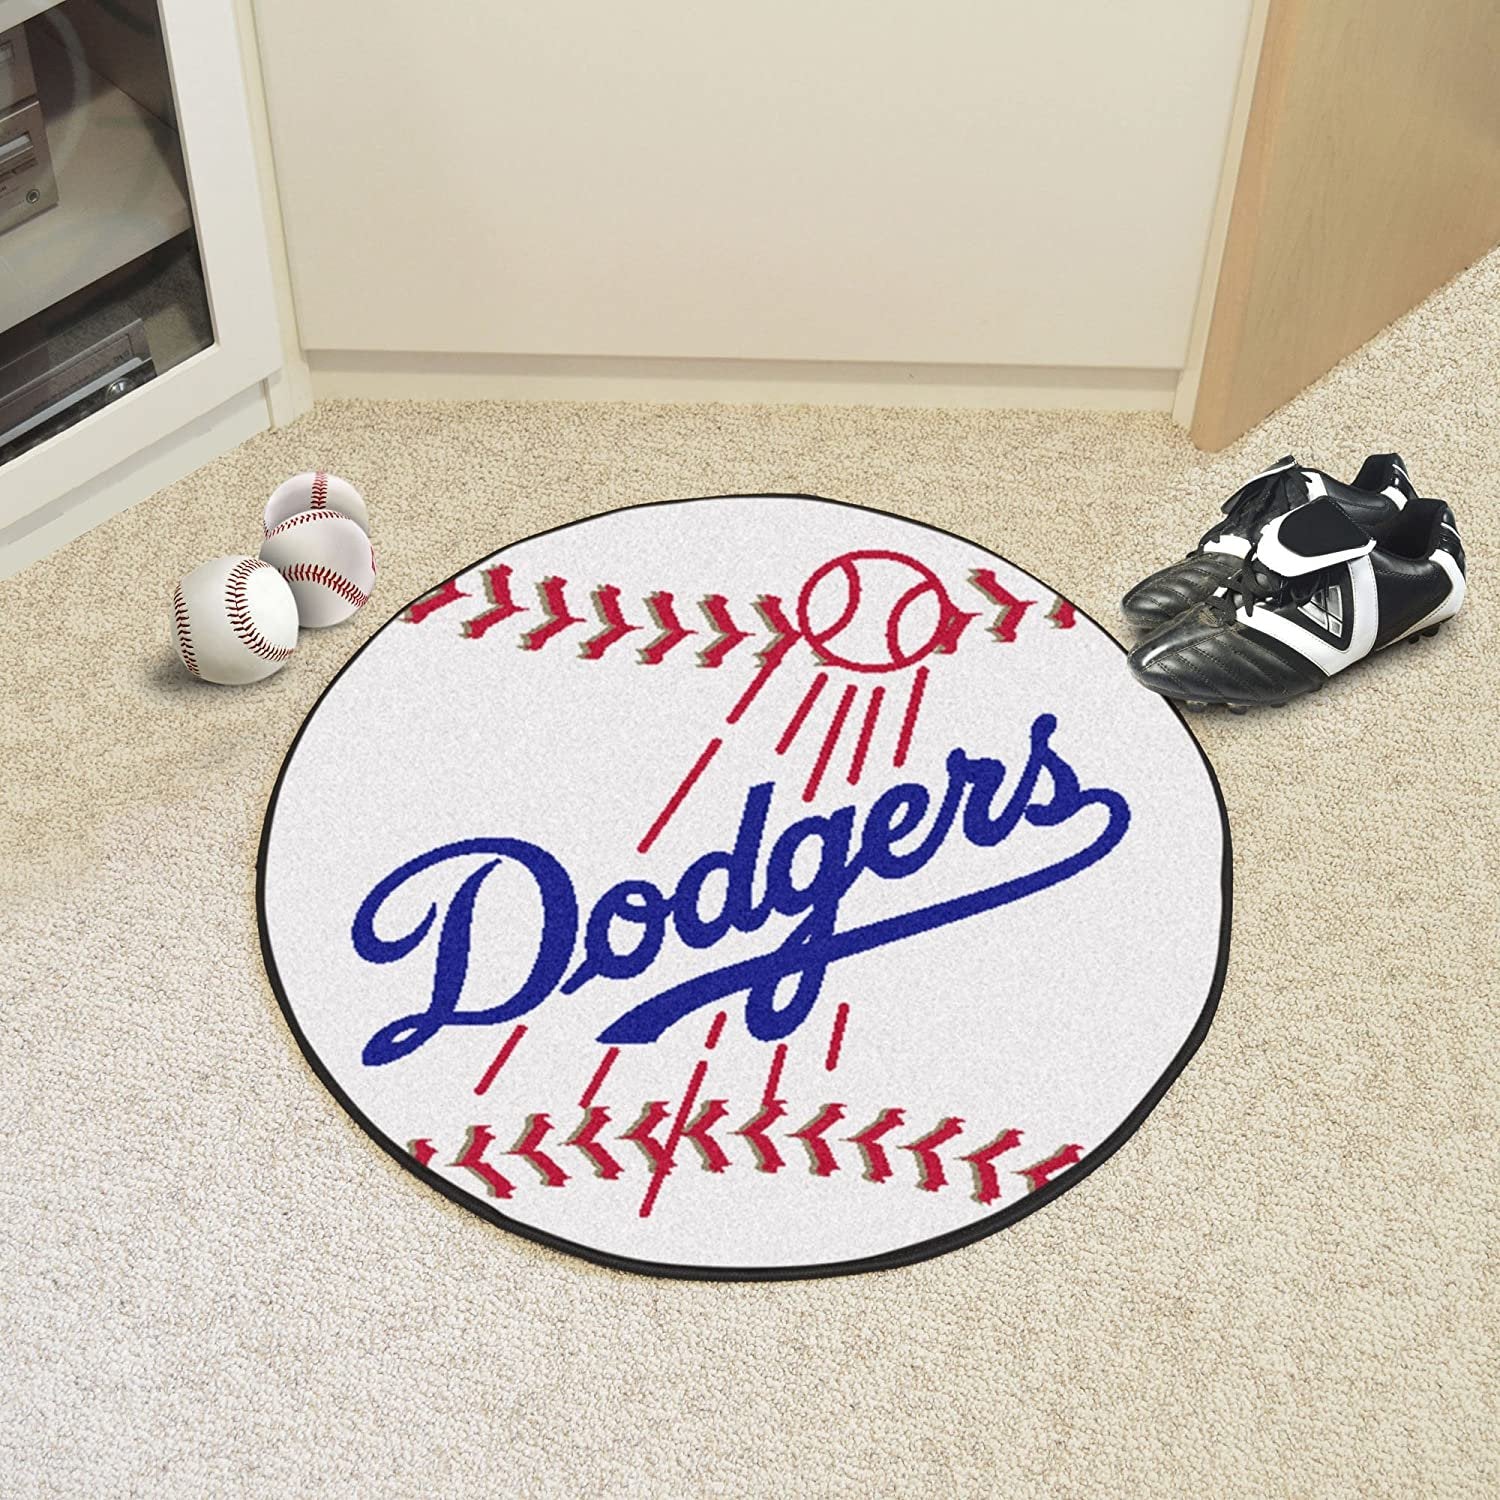 Los Angeles Dodgers 27 Inch Area Rug Floor Mat, Nylon, Anti-Skid Backing, Baseball Shaped